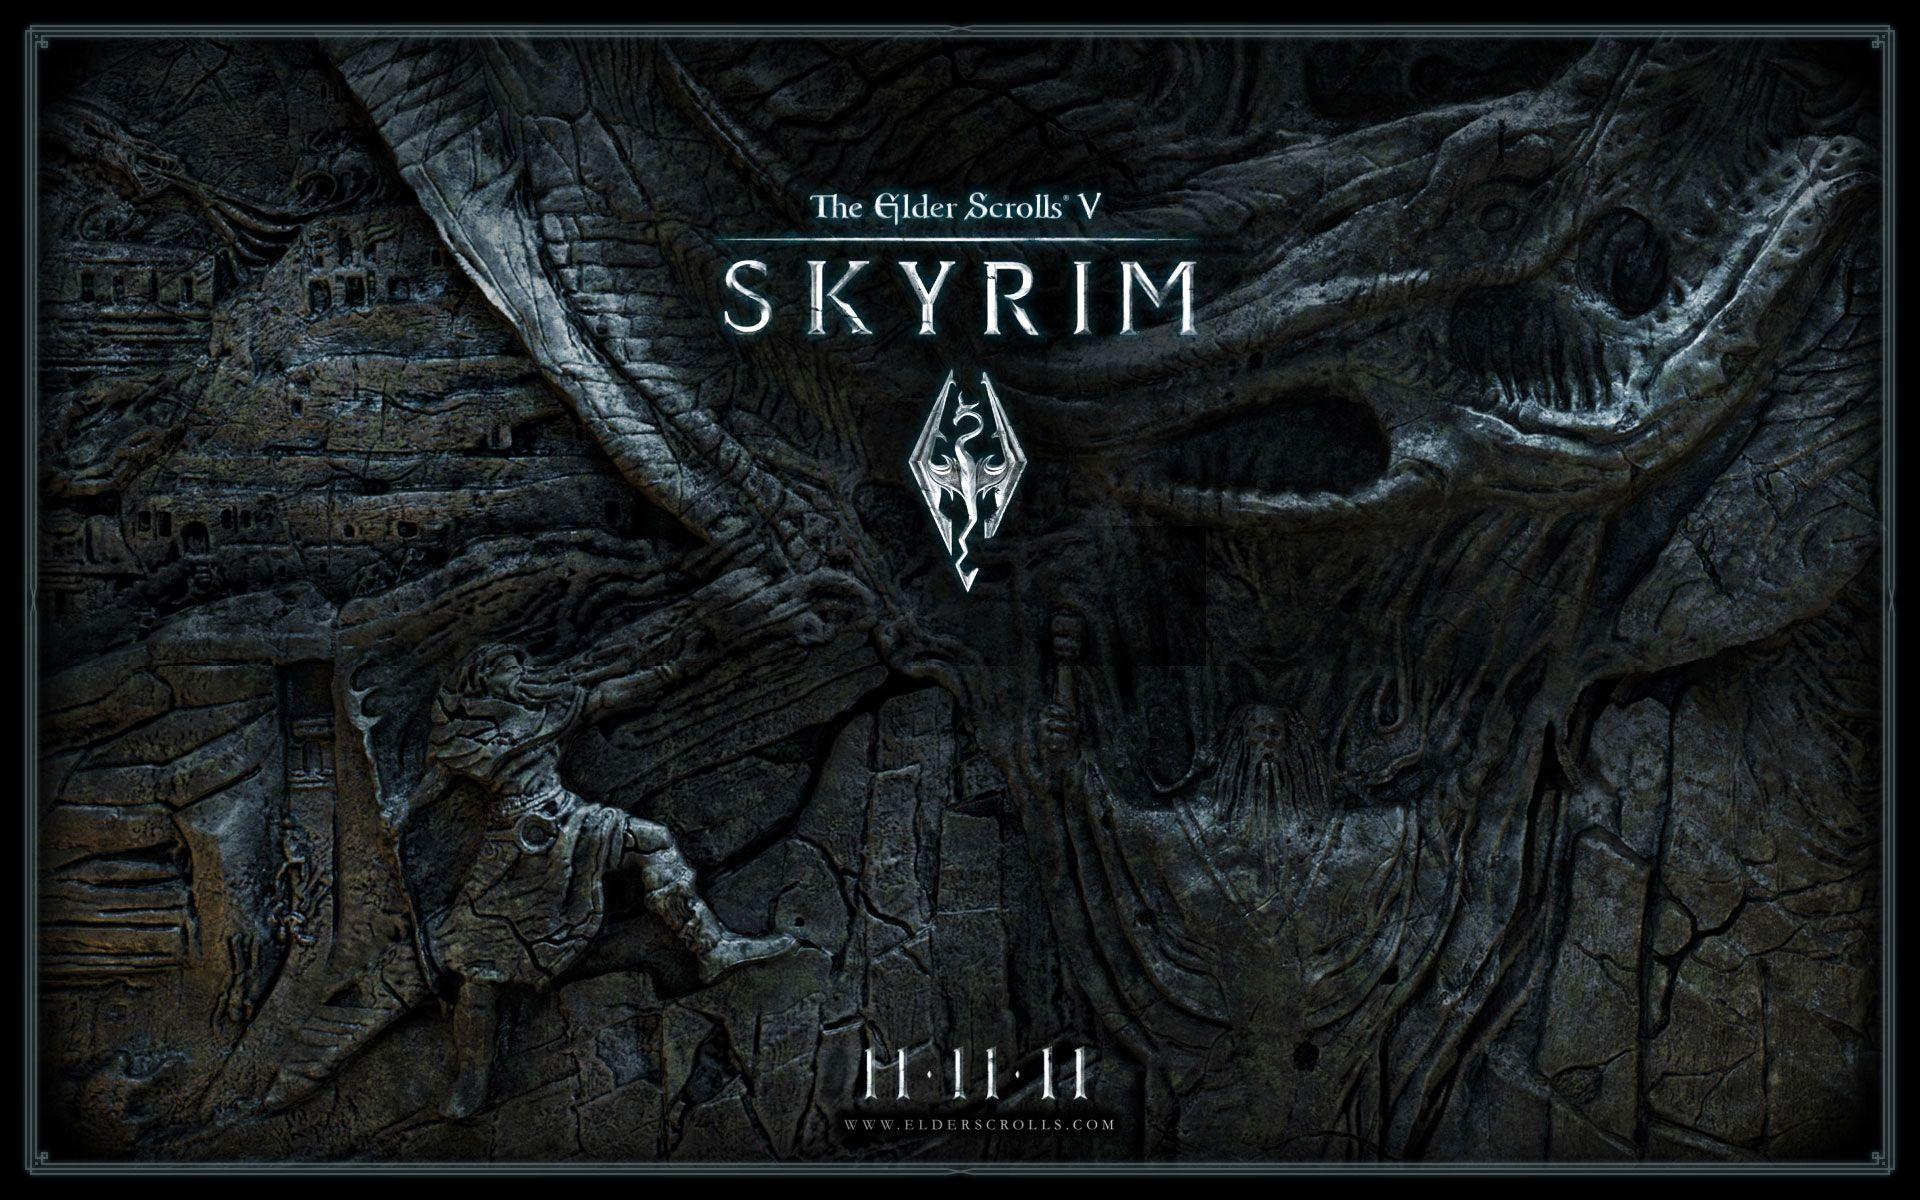 Video Game The Elder Scrolls V: Skyrim wallpaper Desktop, Phone